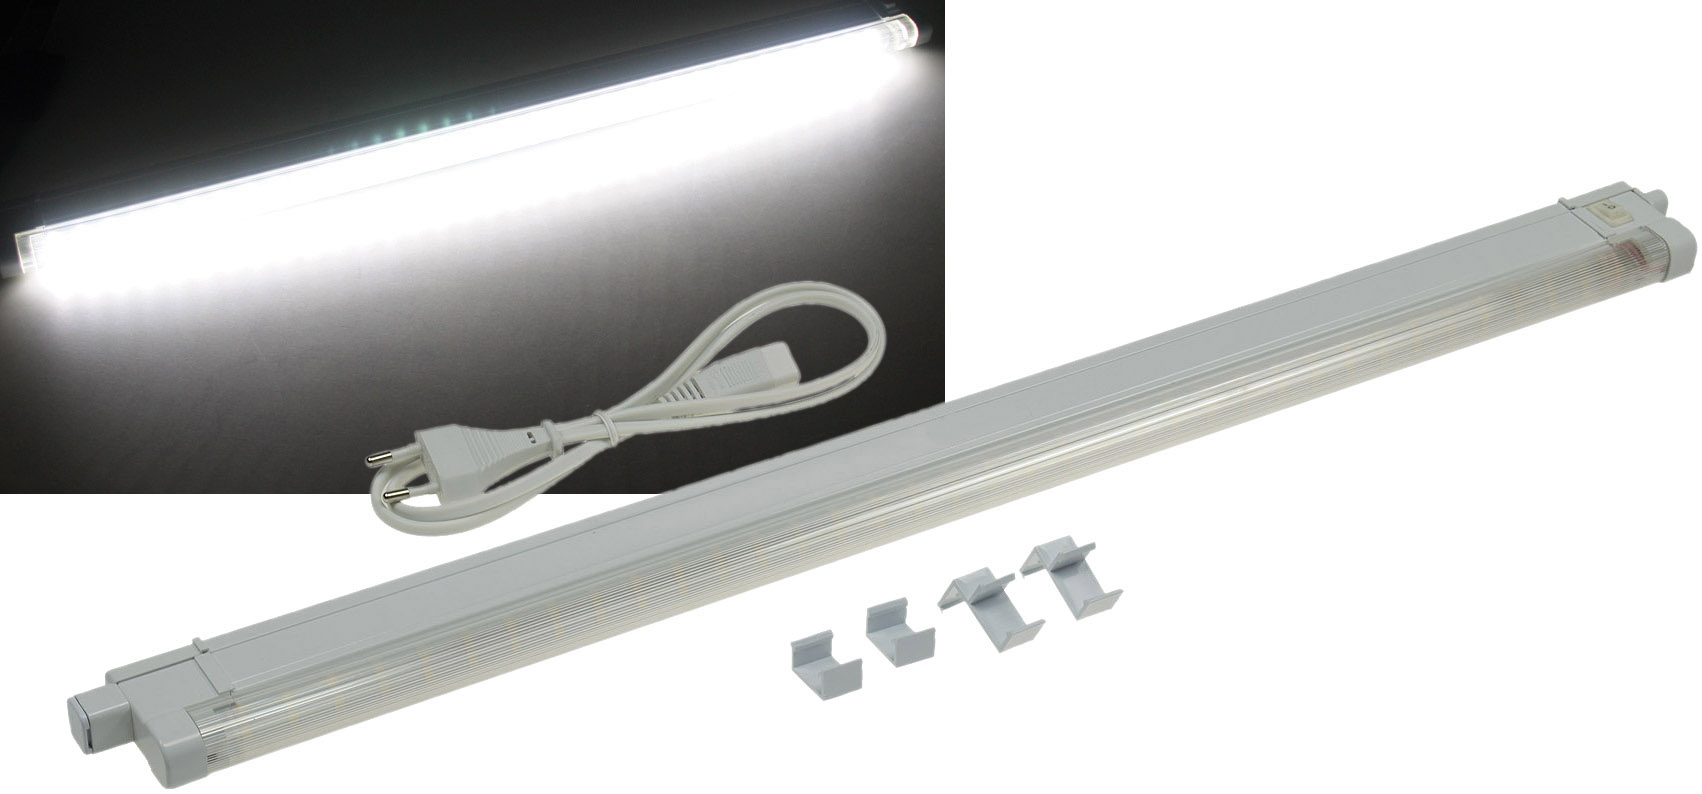 LED Unterbauleuchte "SMD pro" 60cm, 560lm, 6500k, 34 LEDs, Licht weiß